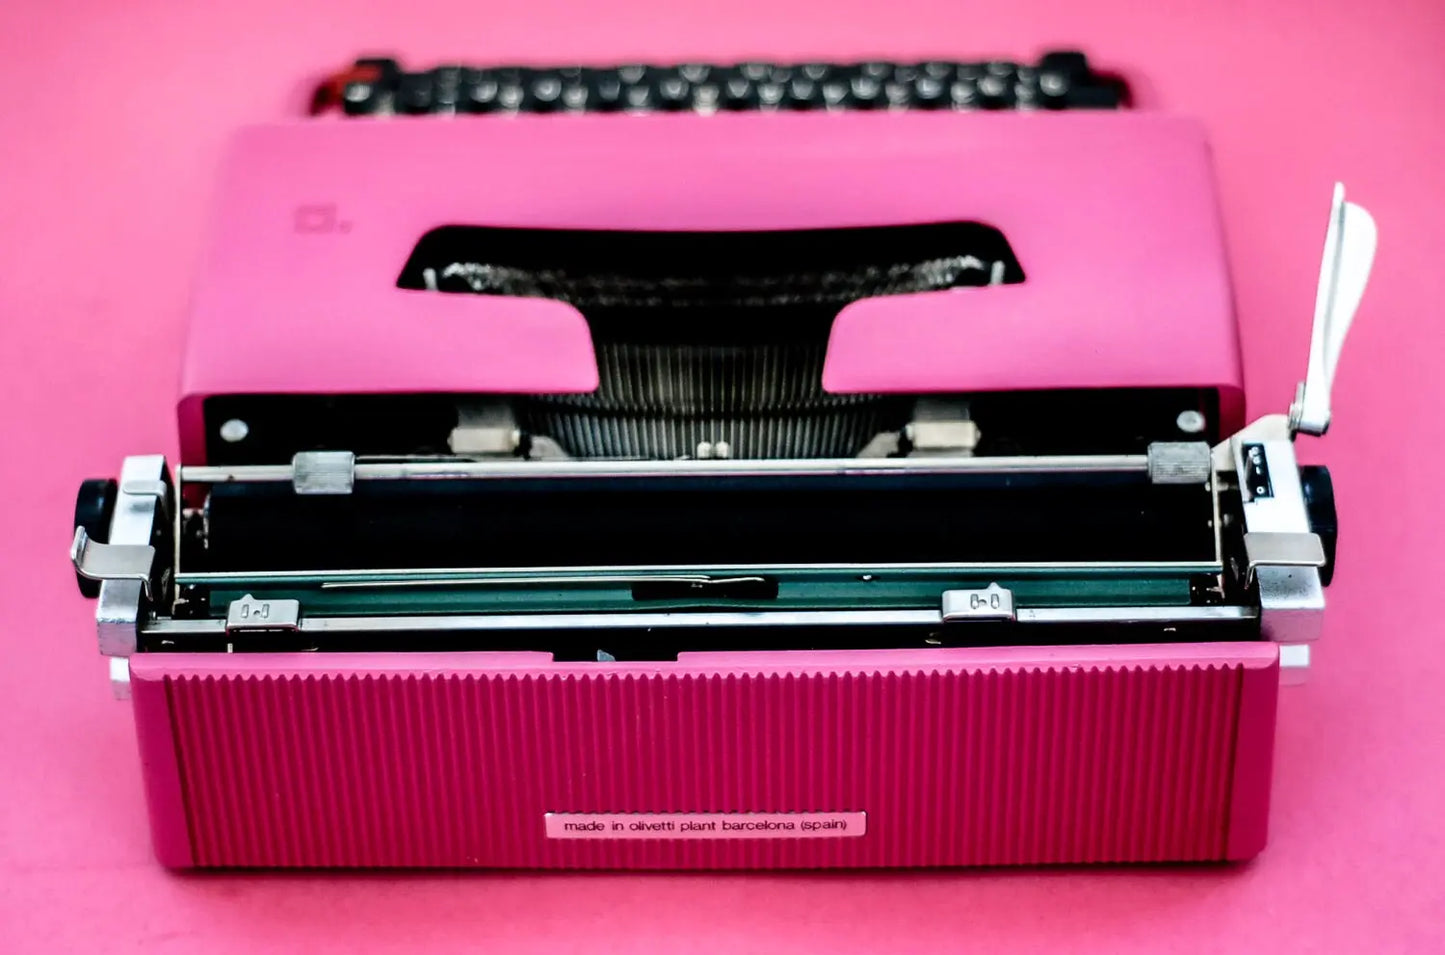 Olivetti Lettera 32 Pink Typewriter, Vintage, Manual Portable, Professionally Serviced by Typewriter.Company - ElGranero Typewriter.Company